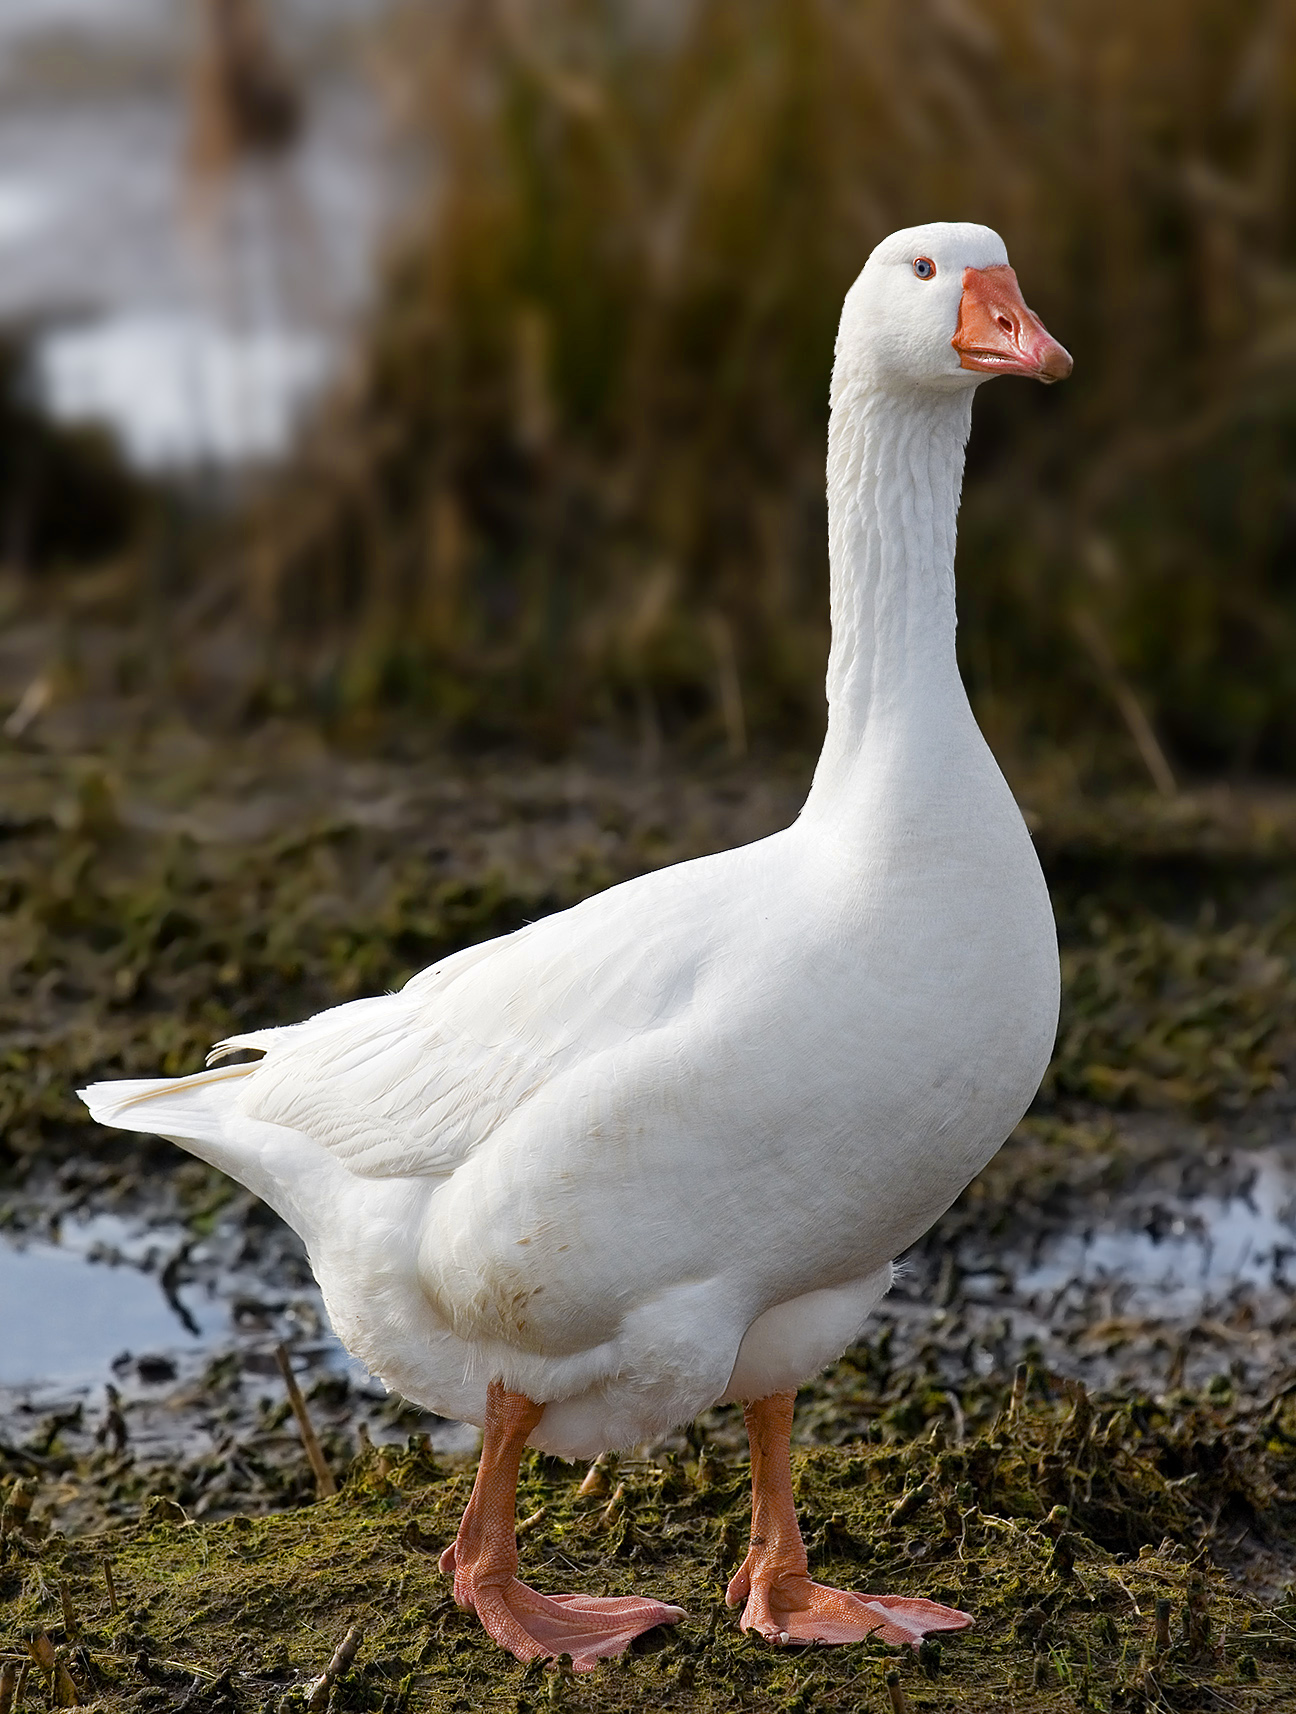 File:Domestic Goose.jpg - Wikipedia